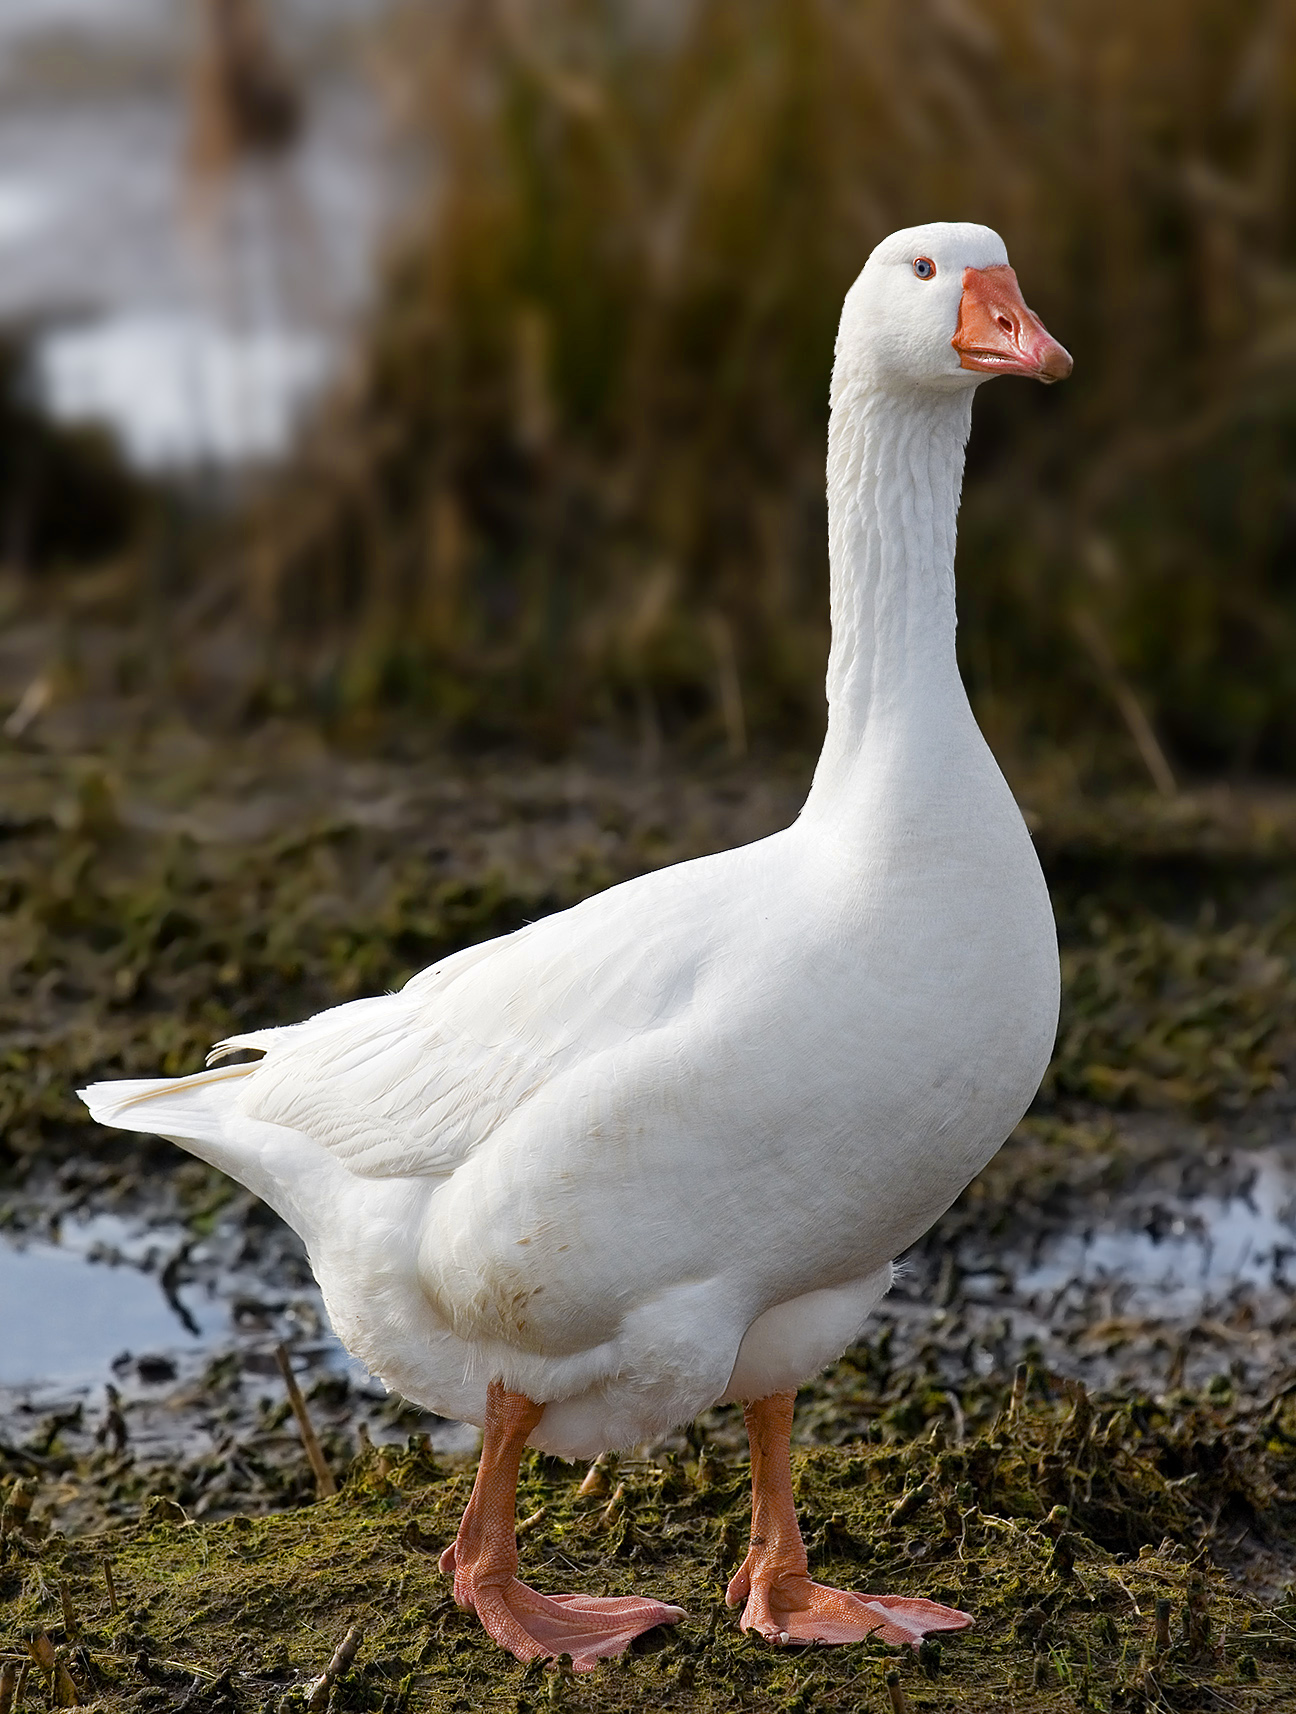 File:Domestic Goose.jpg - Wikipedia